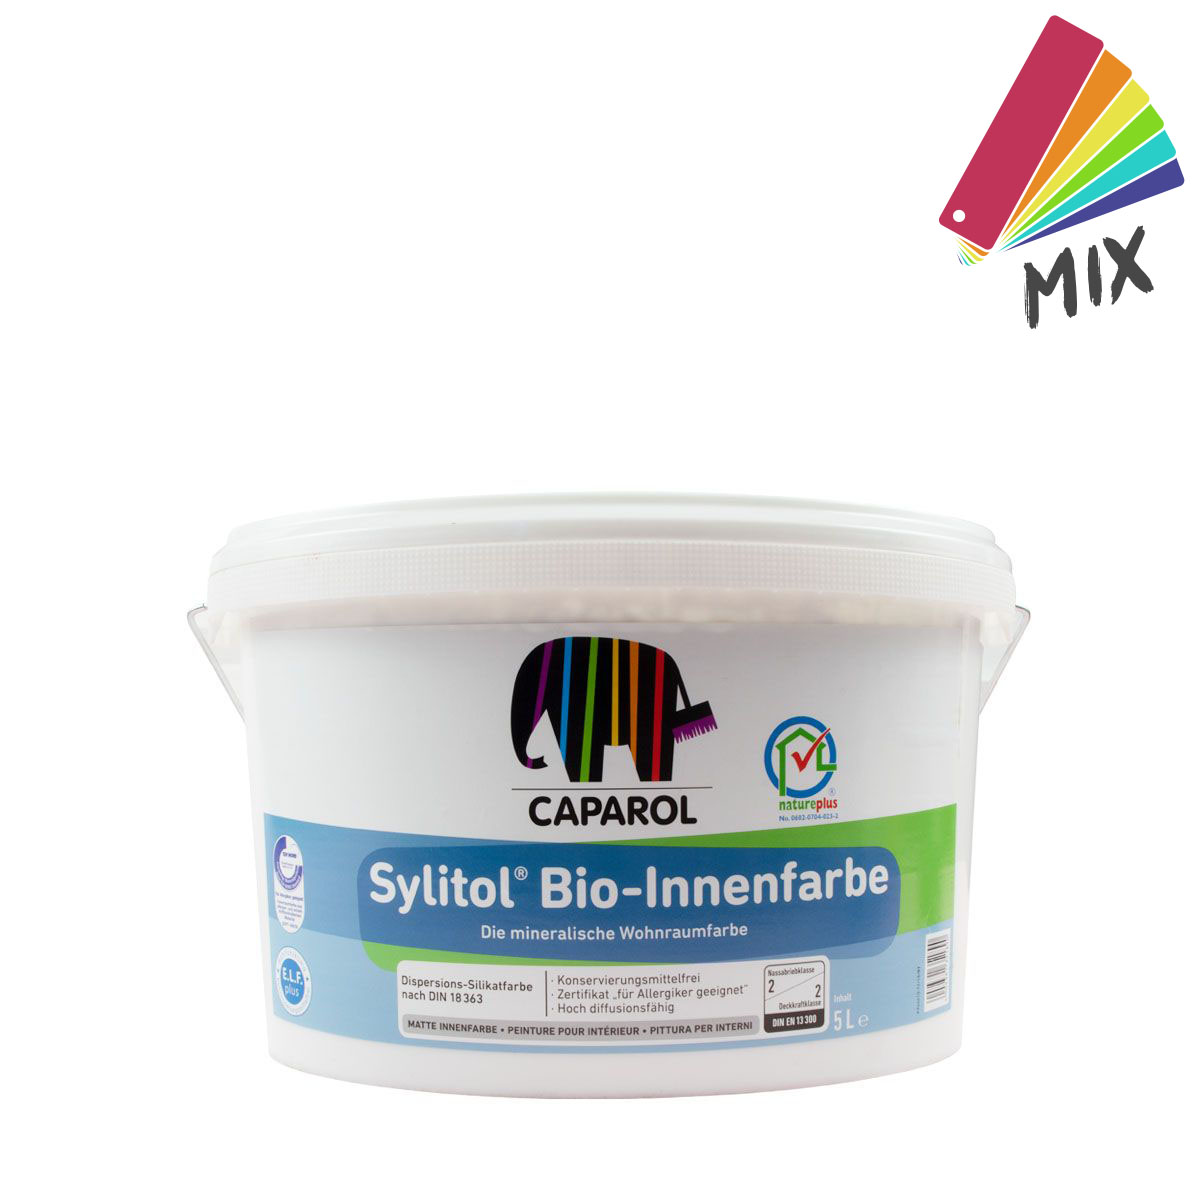 Caparol Sylitol Bio-Innenfarbe 5L MIX PG A, Allergiker geeignet